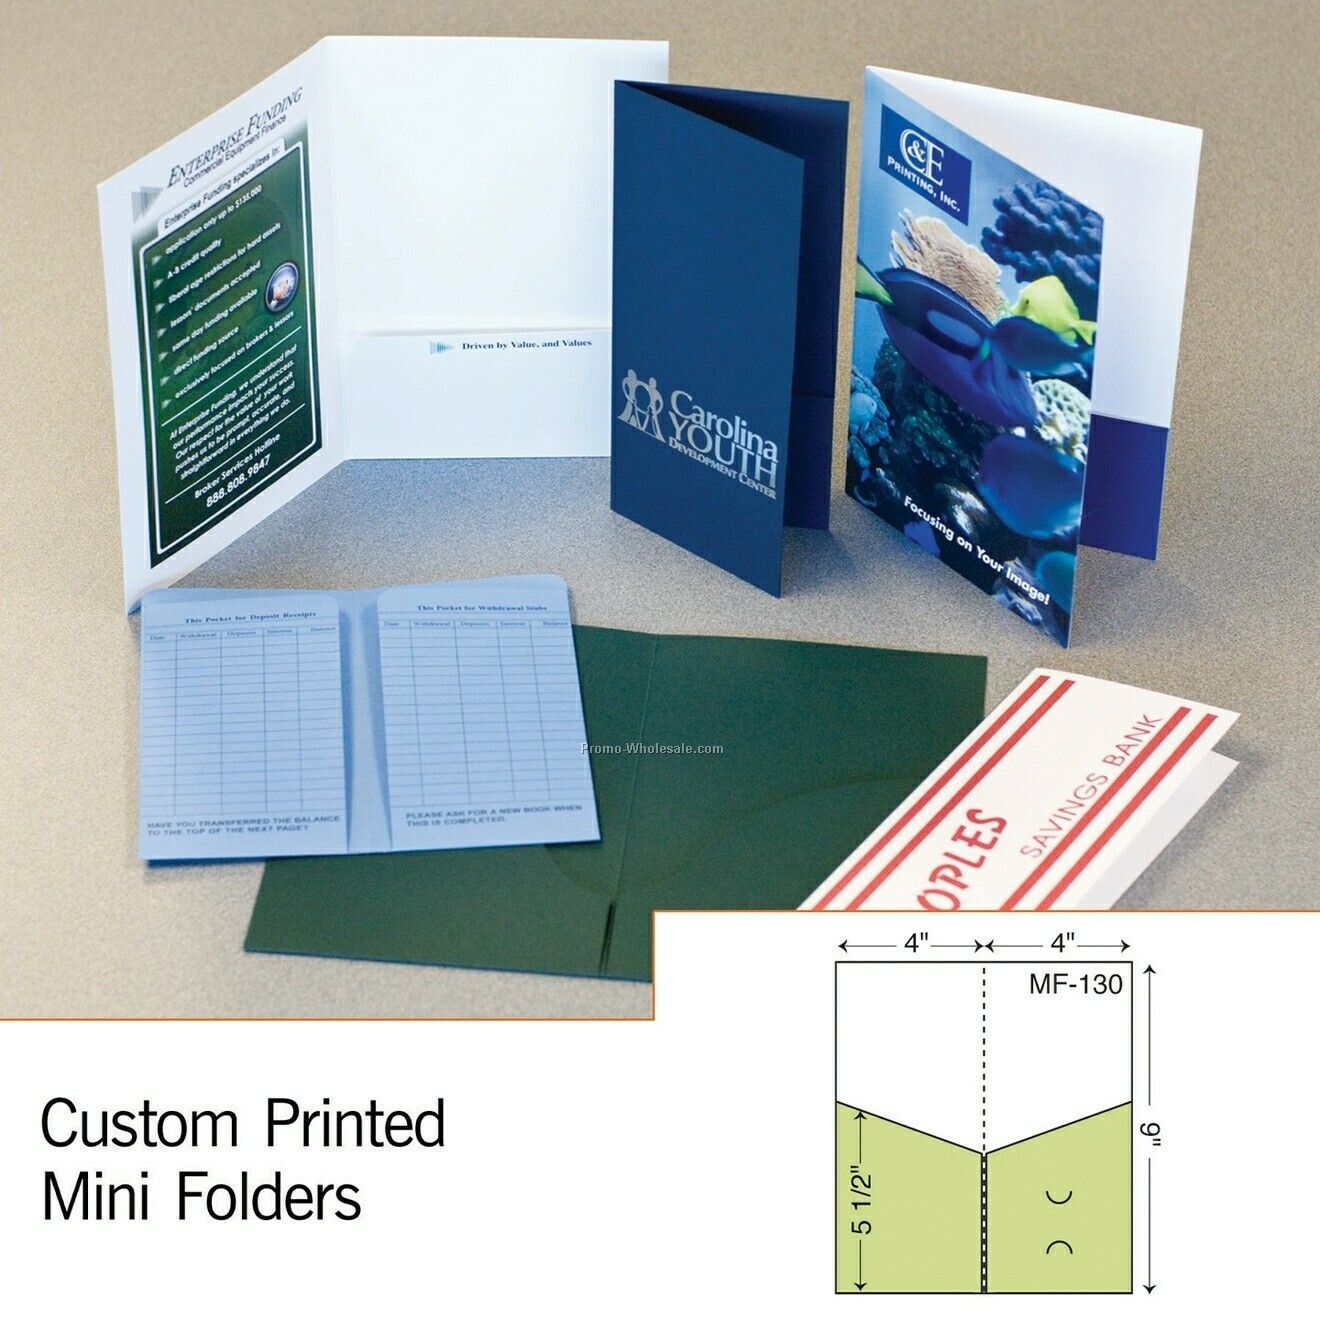 4"x9" Mini Folder W/ Right Pocket (1 Color)